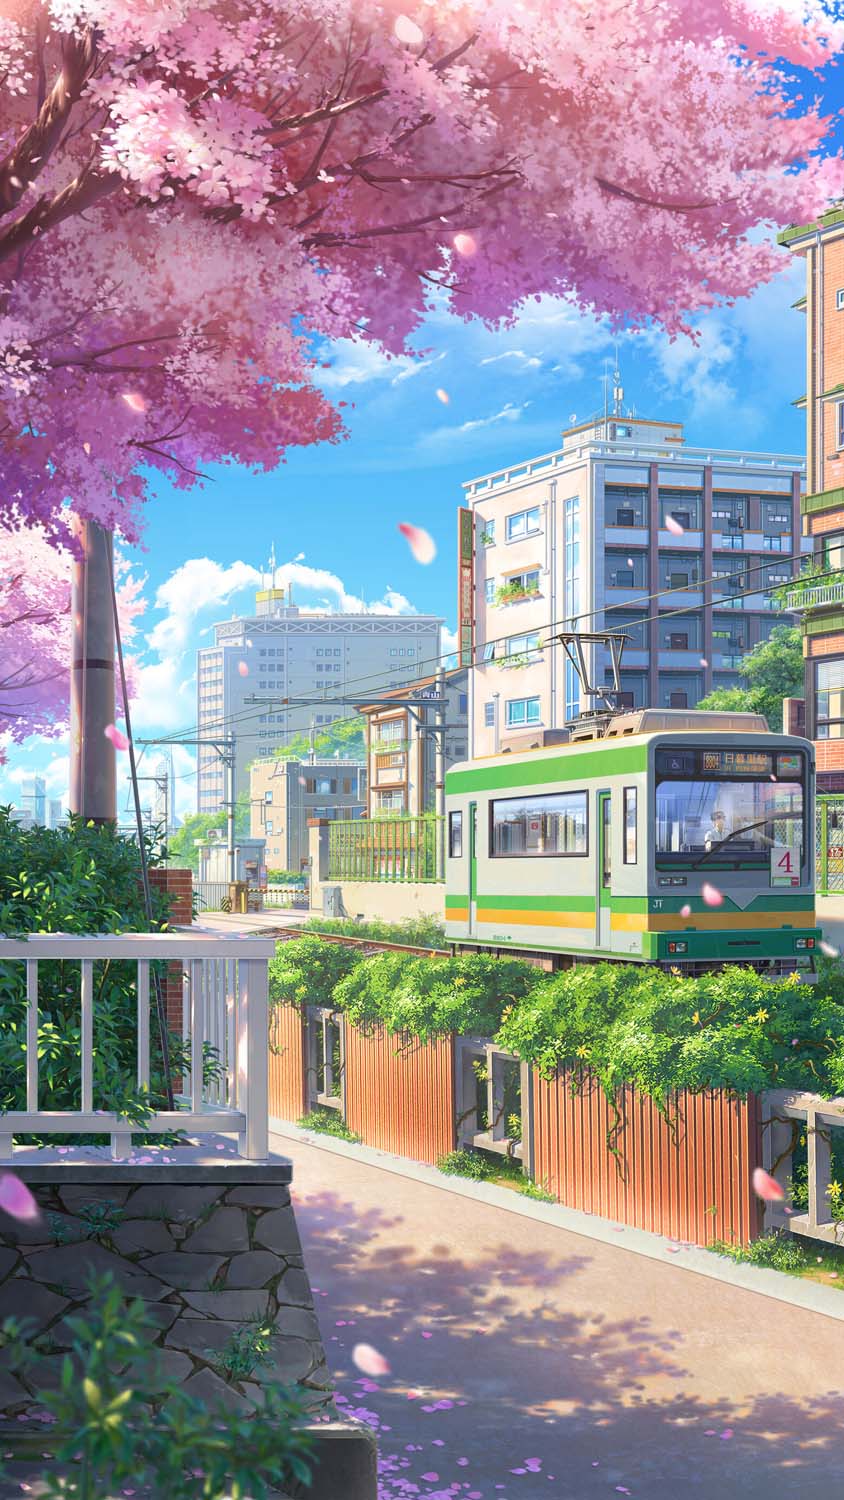 Tokyo City Anime IPhone Wallpaper HD - IPhone Wallpapers : iPhone Wallpapers